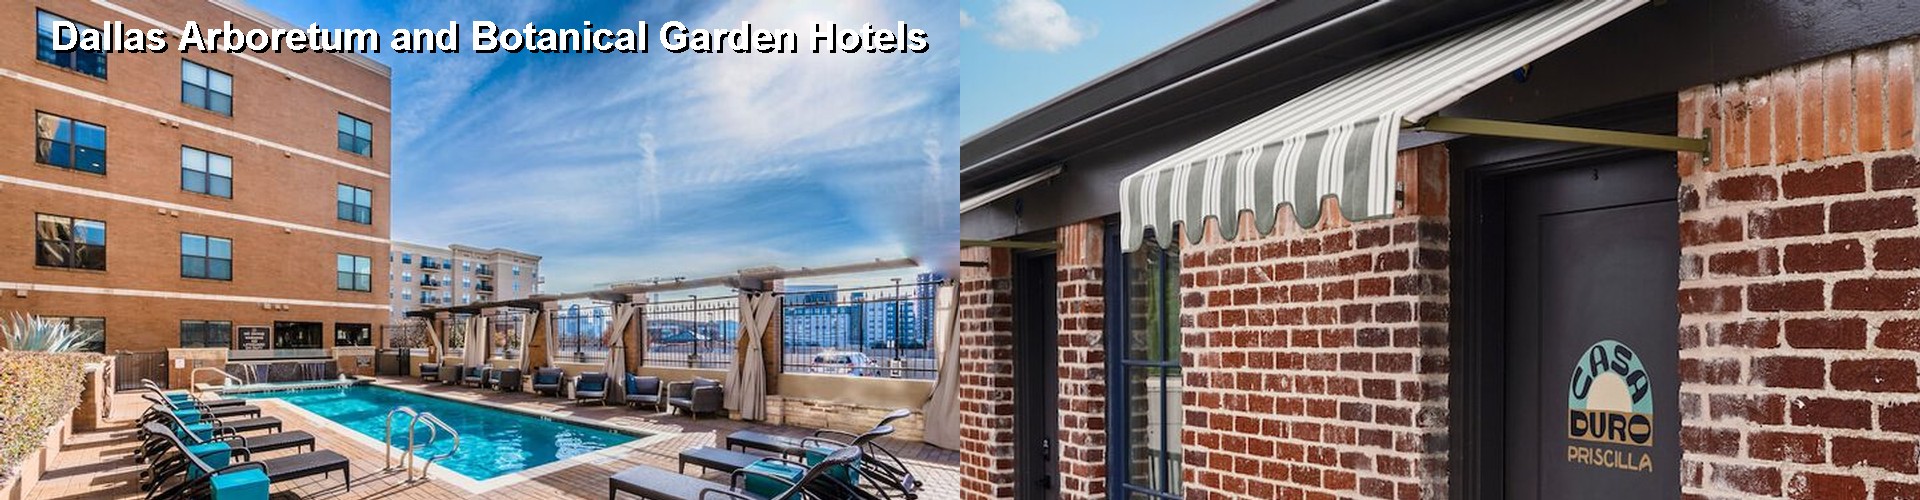 2 Best Hotels near Dallas Arboretum and Botanical Garden